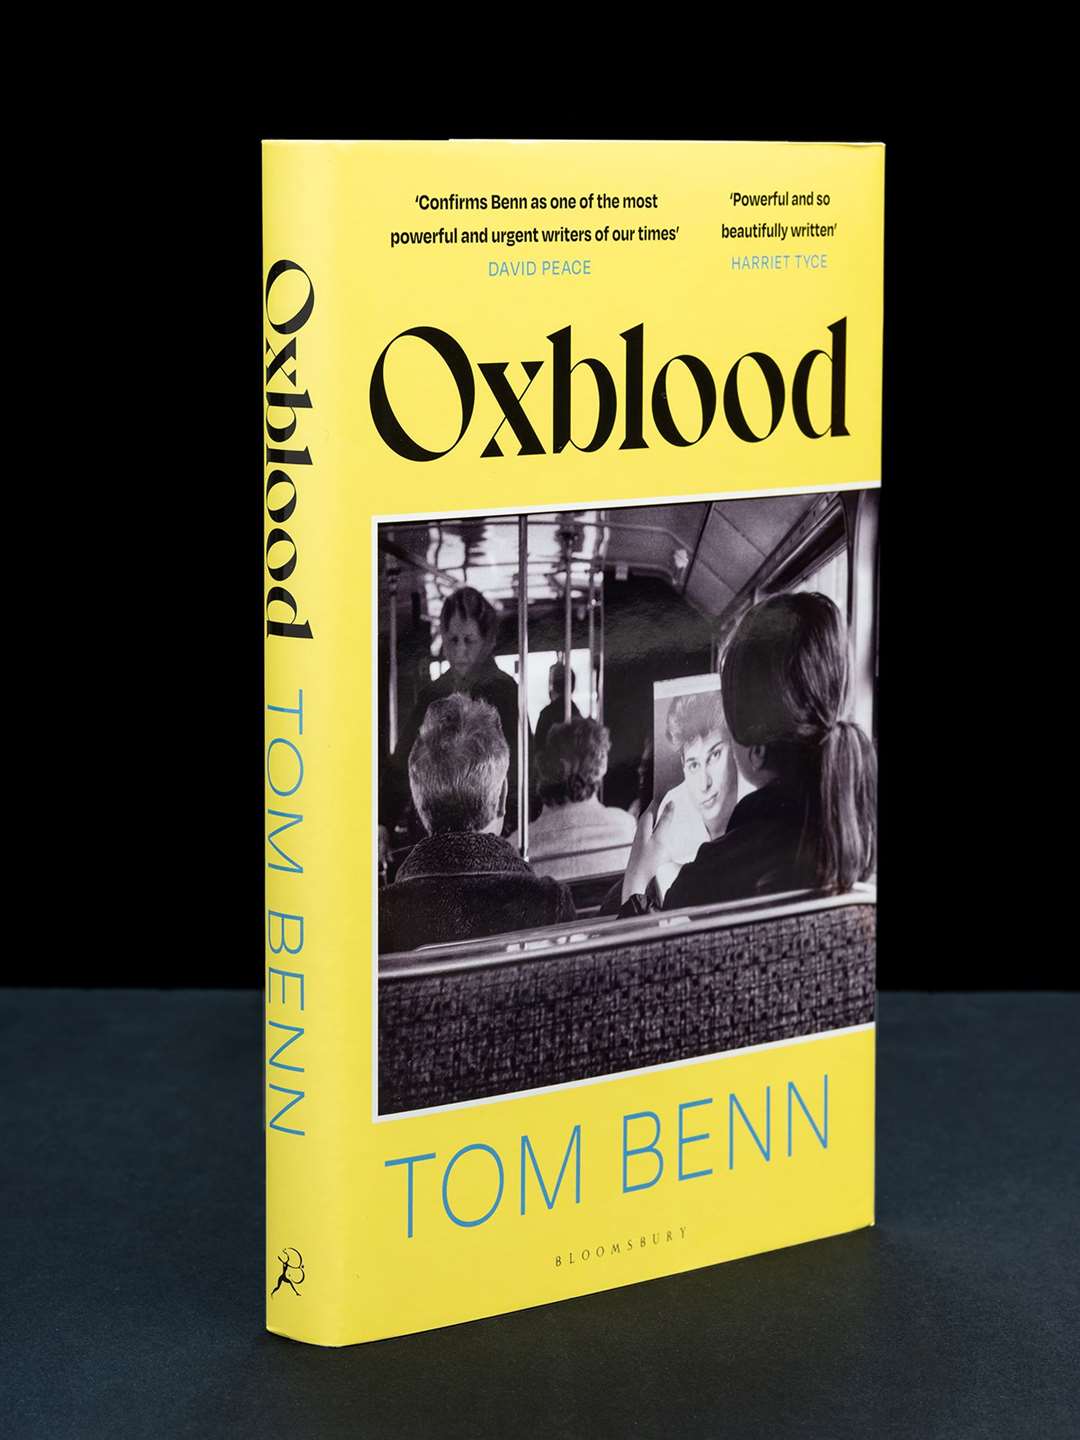 Tom Benn’s book Oxblood. (Roger Davies/The Sunday Times Charlotte Aitken Young Writer Award)